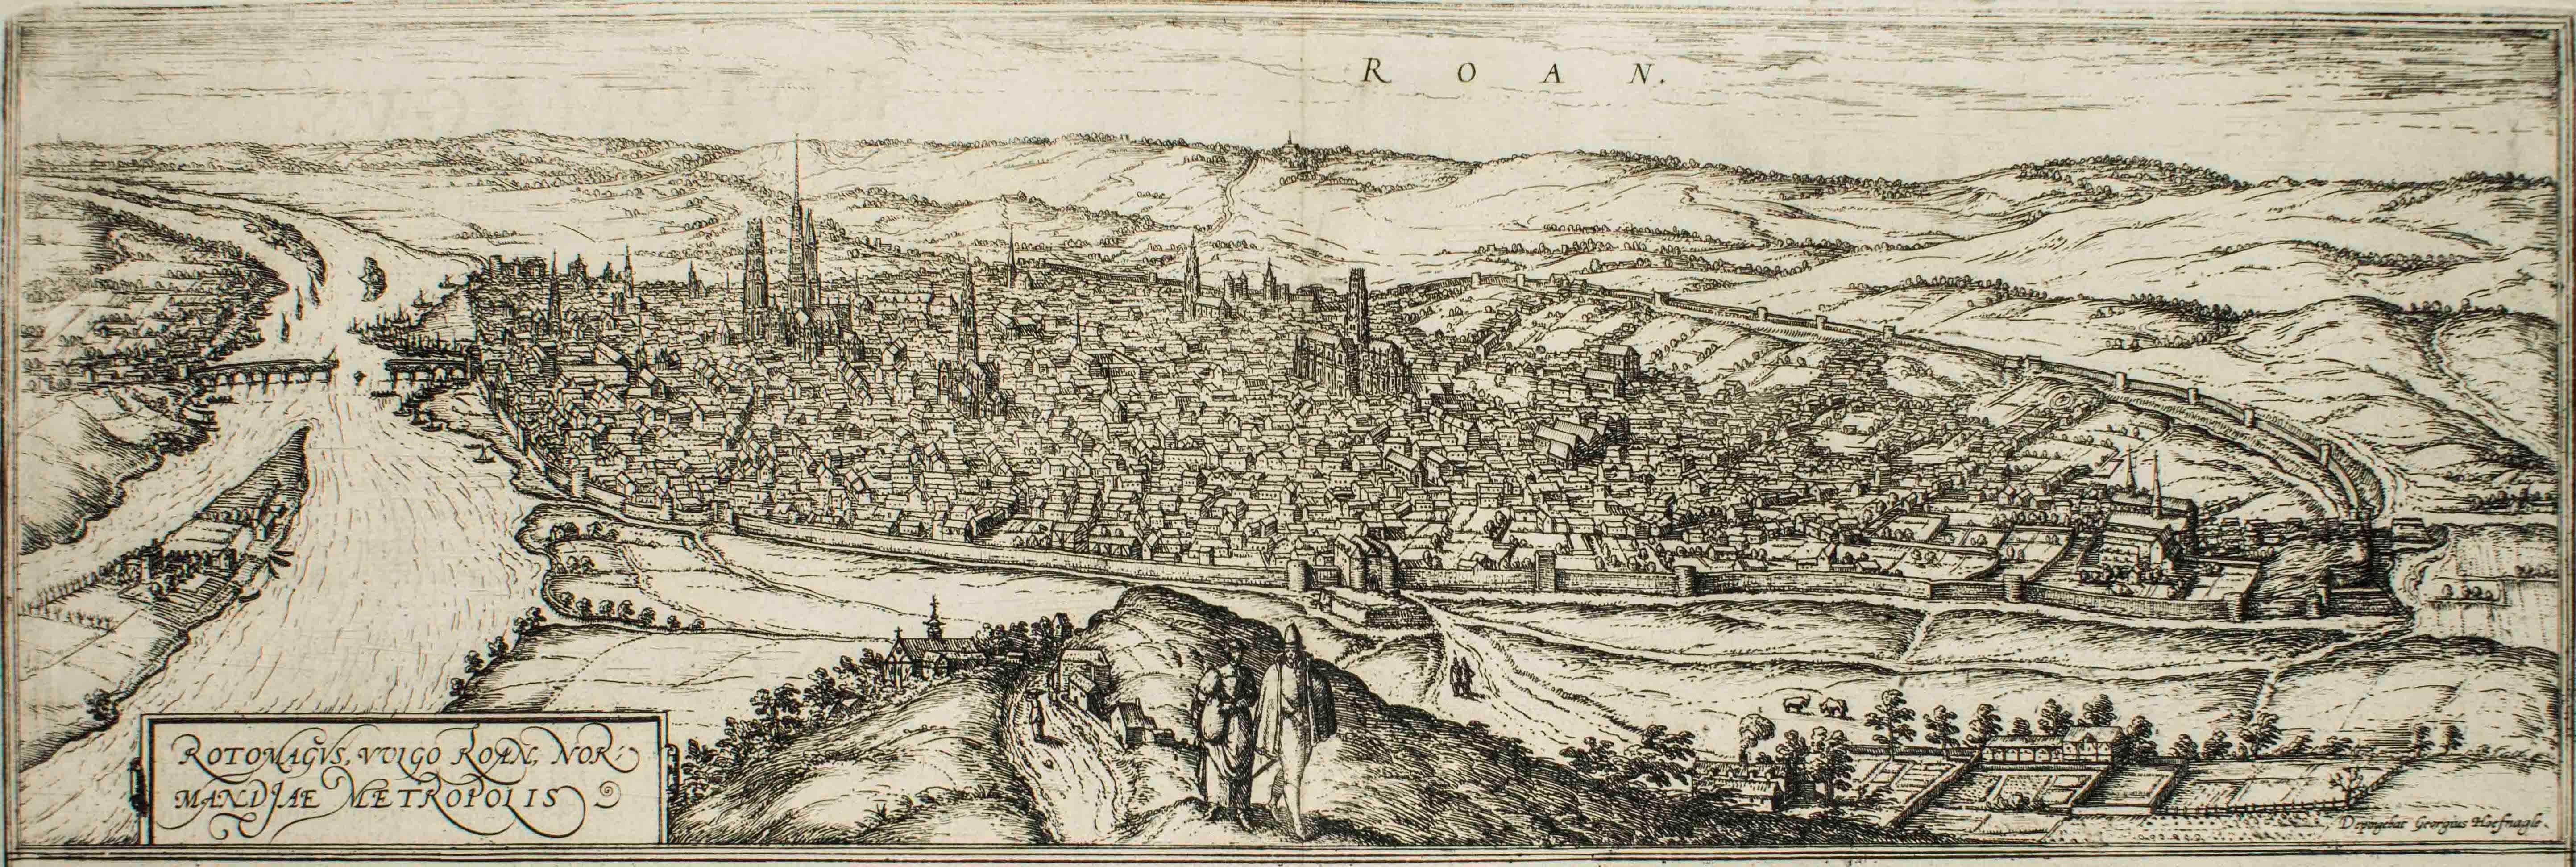 Frans Hogenberg Figurative Print - Rotomagus, Map from "Civitates Orbis Terrarum" - by F. Hogenberg - 1572/1617